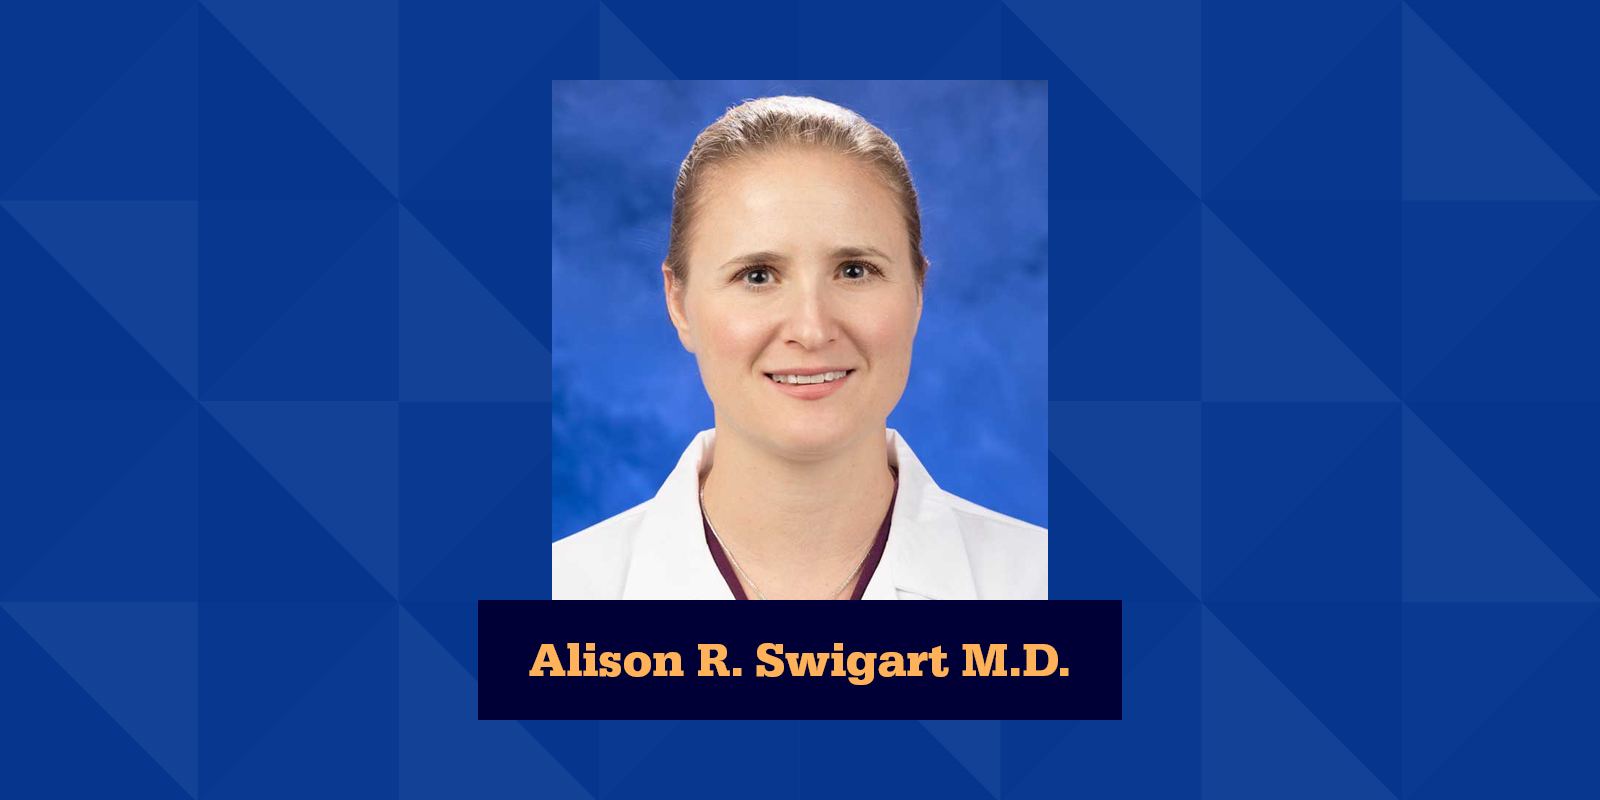 Alison R. Swigart M.D.